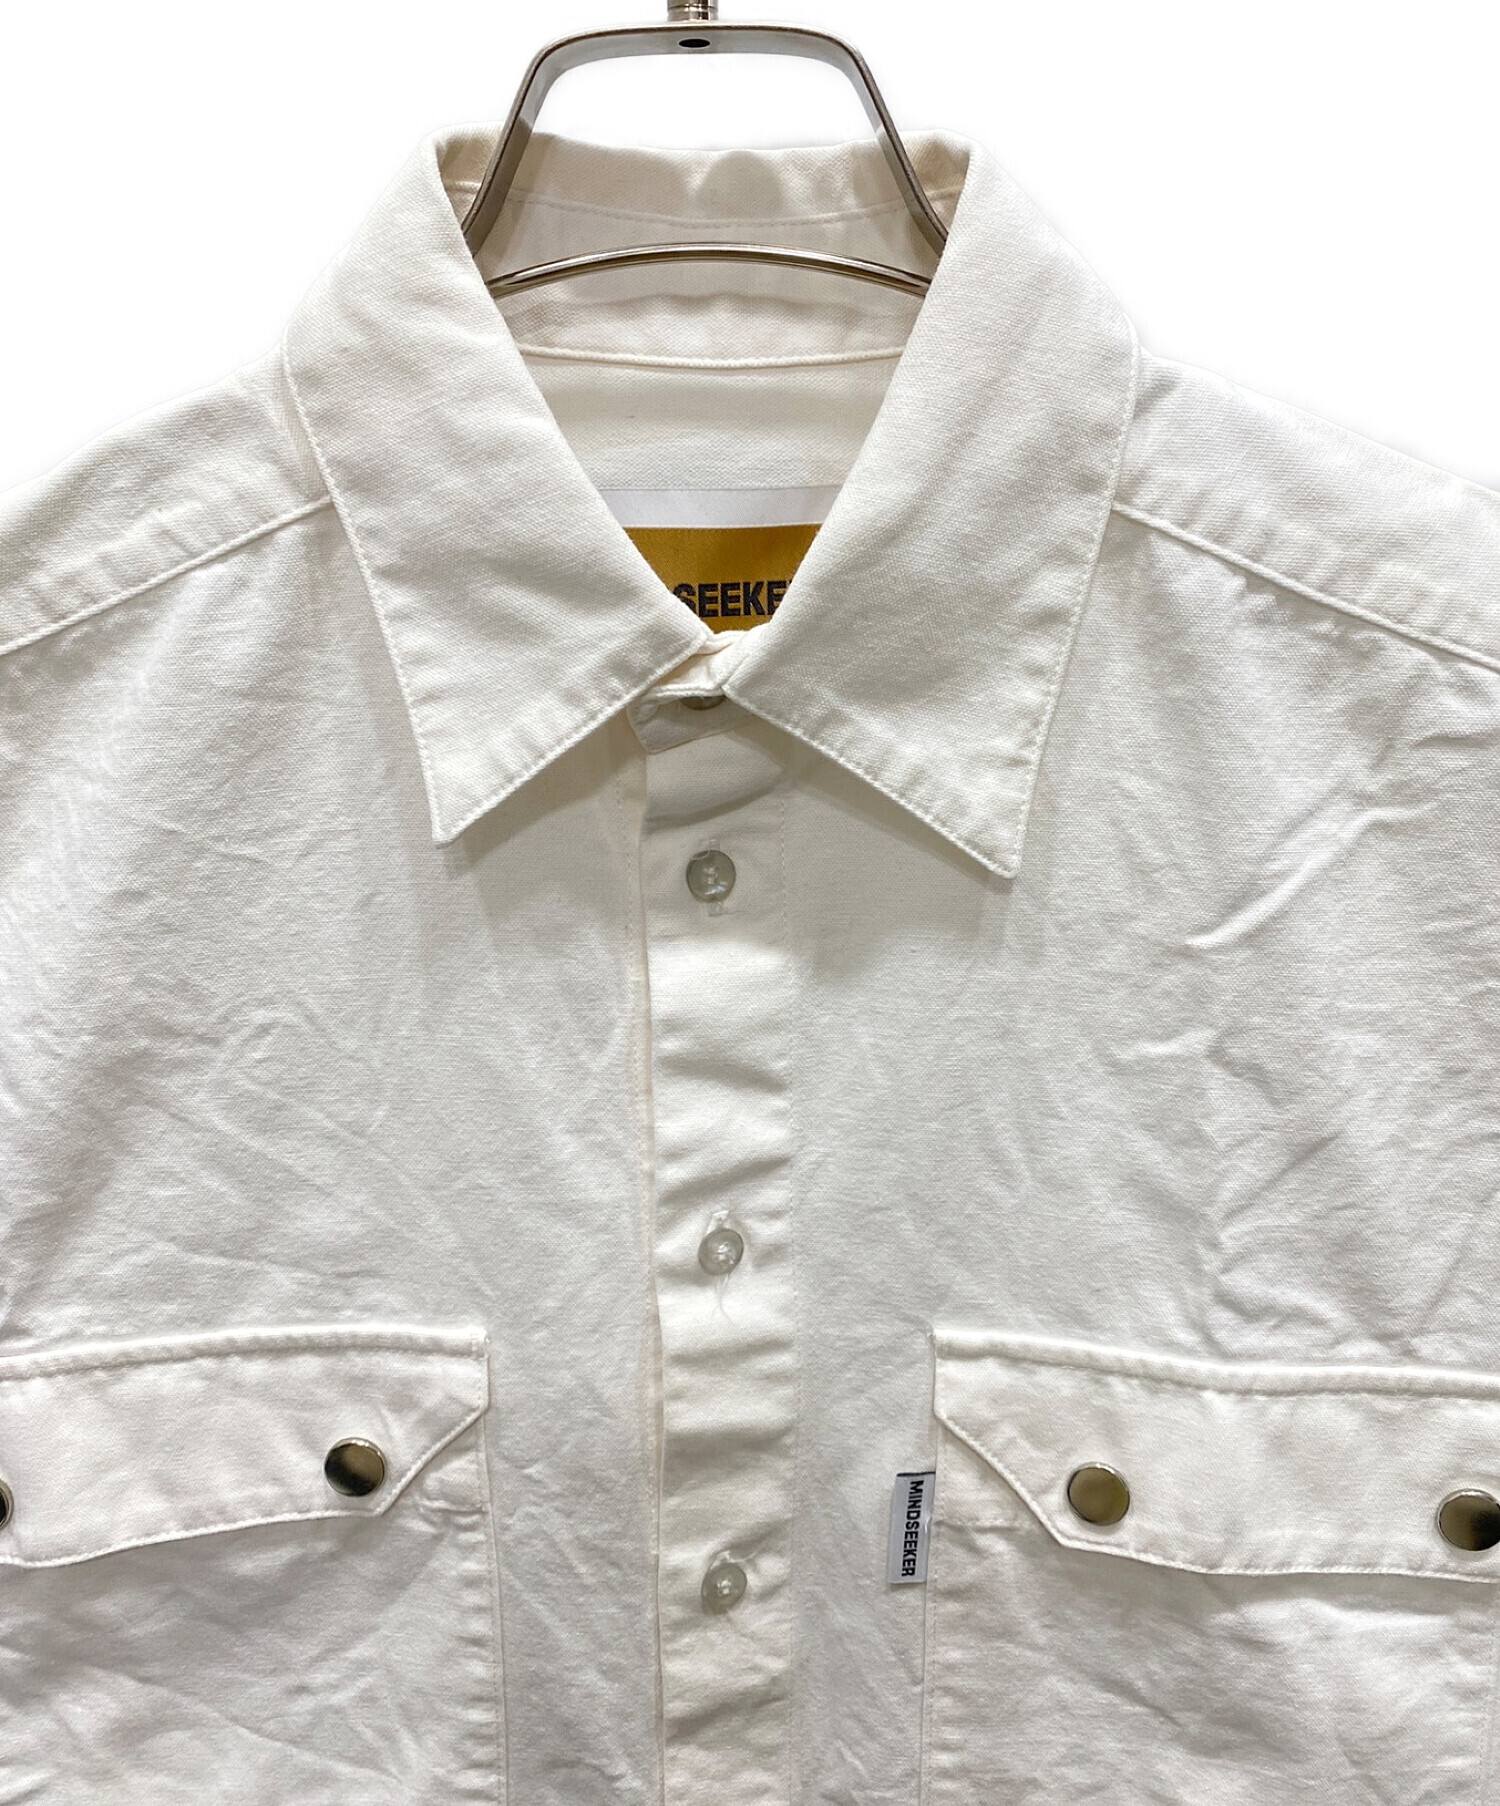 MINDSEEKER (マインドシーカー) バックプリントシャツ ホワイト サイズ:44